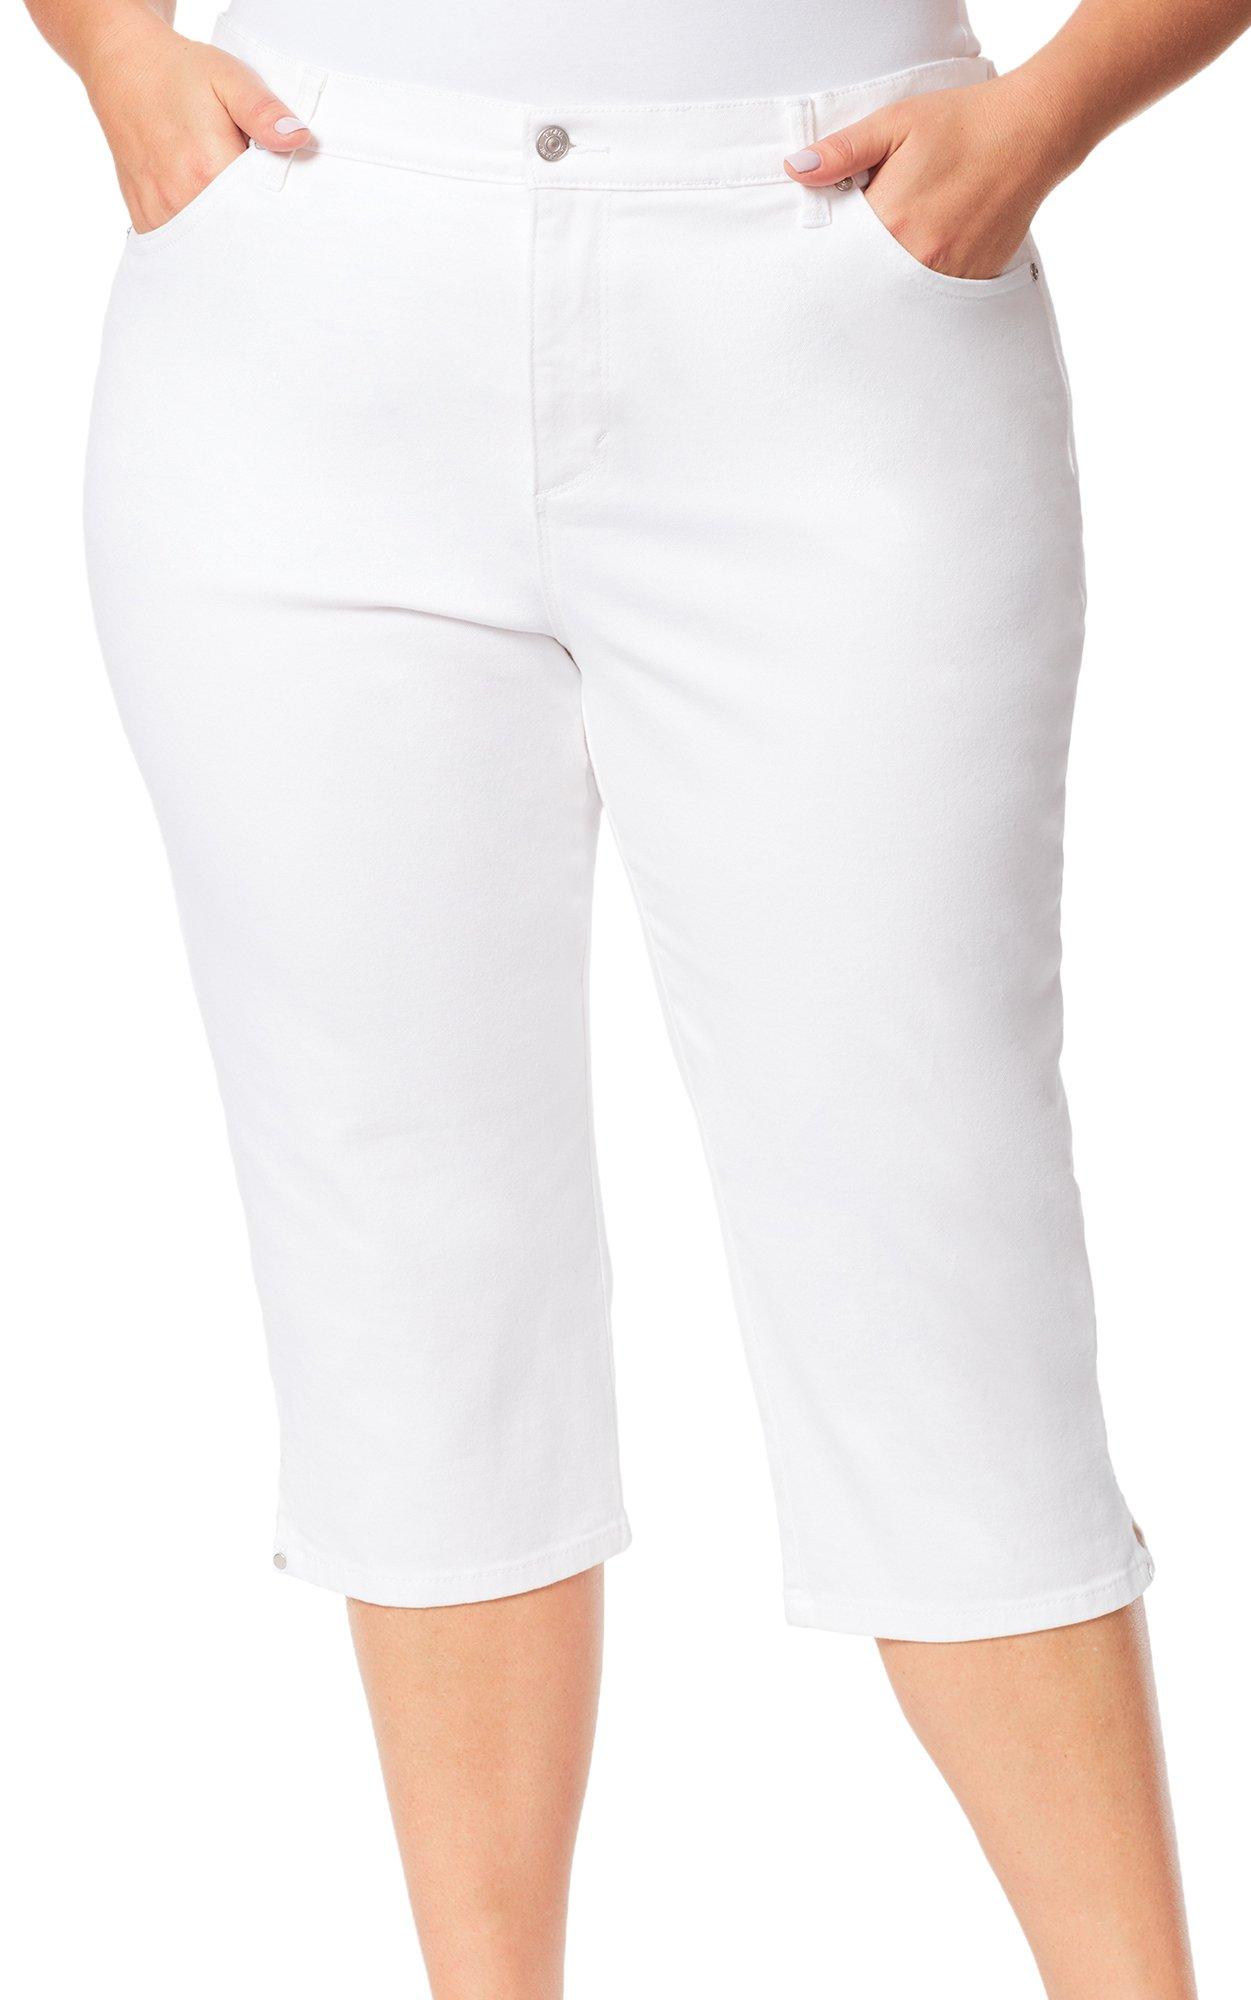 Capri Pants for Women Cotton Linen Plus Size Cargo Pants Capris Elastic High  Waisted 3/4 Slacks with Multi Pockets (Small, Brown) 